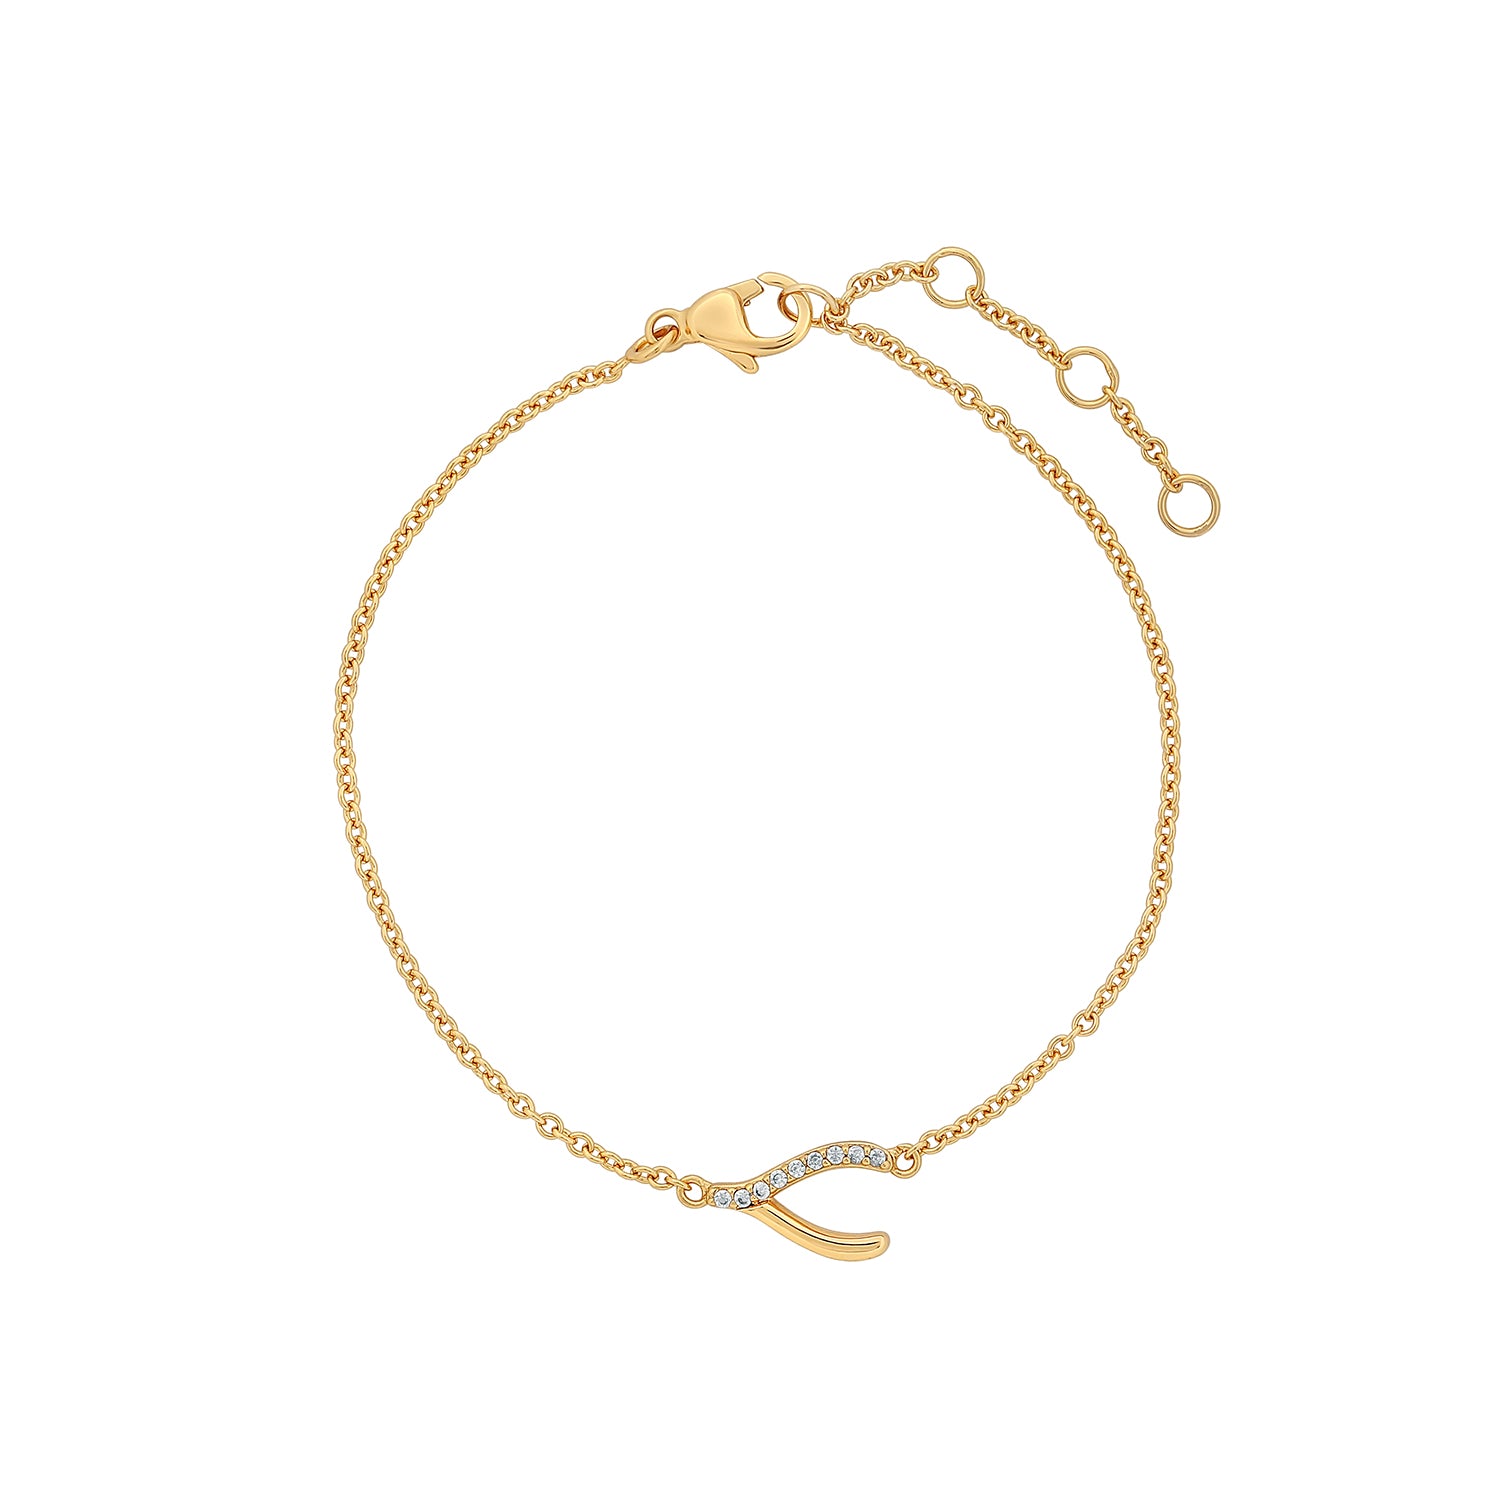 Elegant and minimalist gold wishbone pendant bracelet set with cubic zirconia stones.